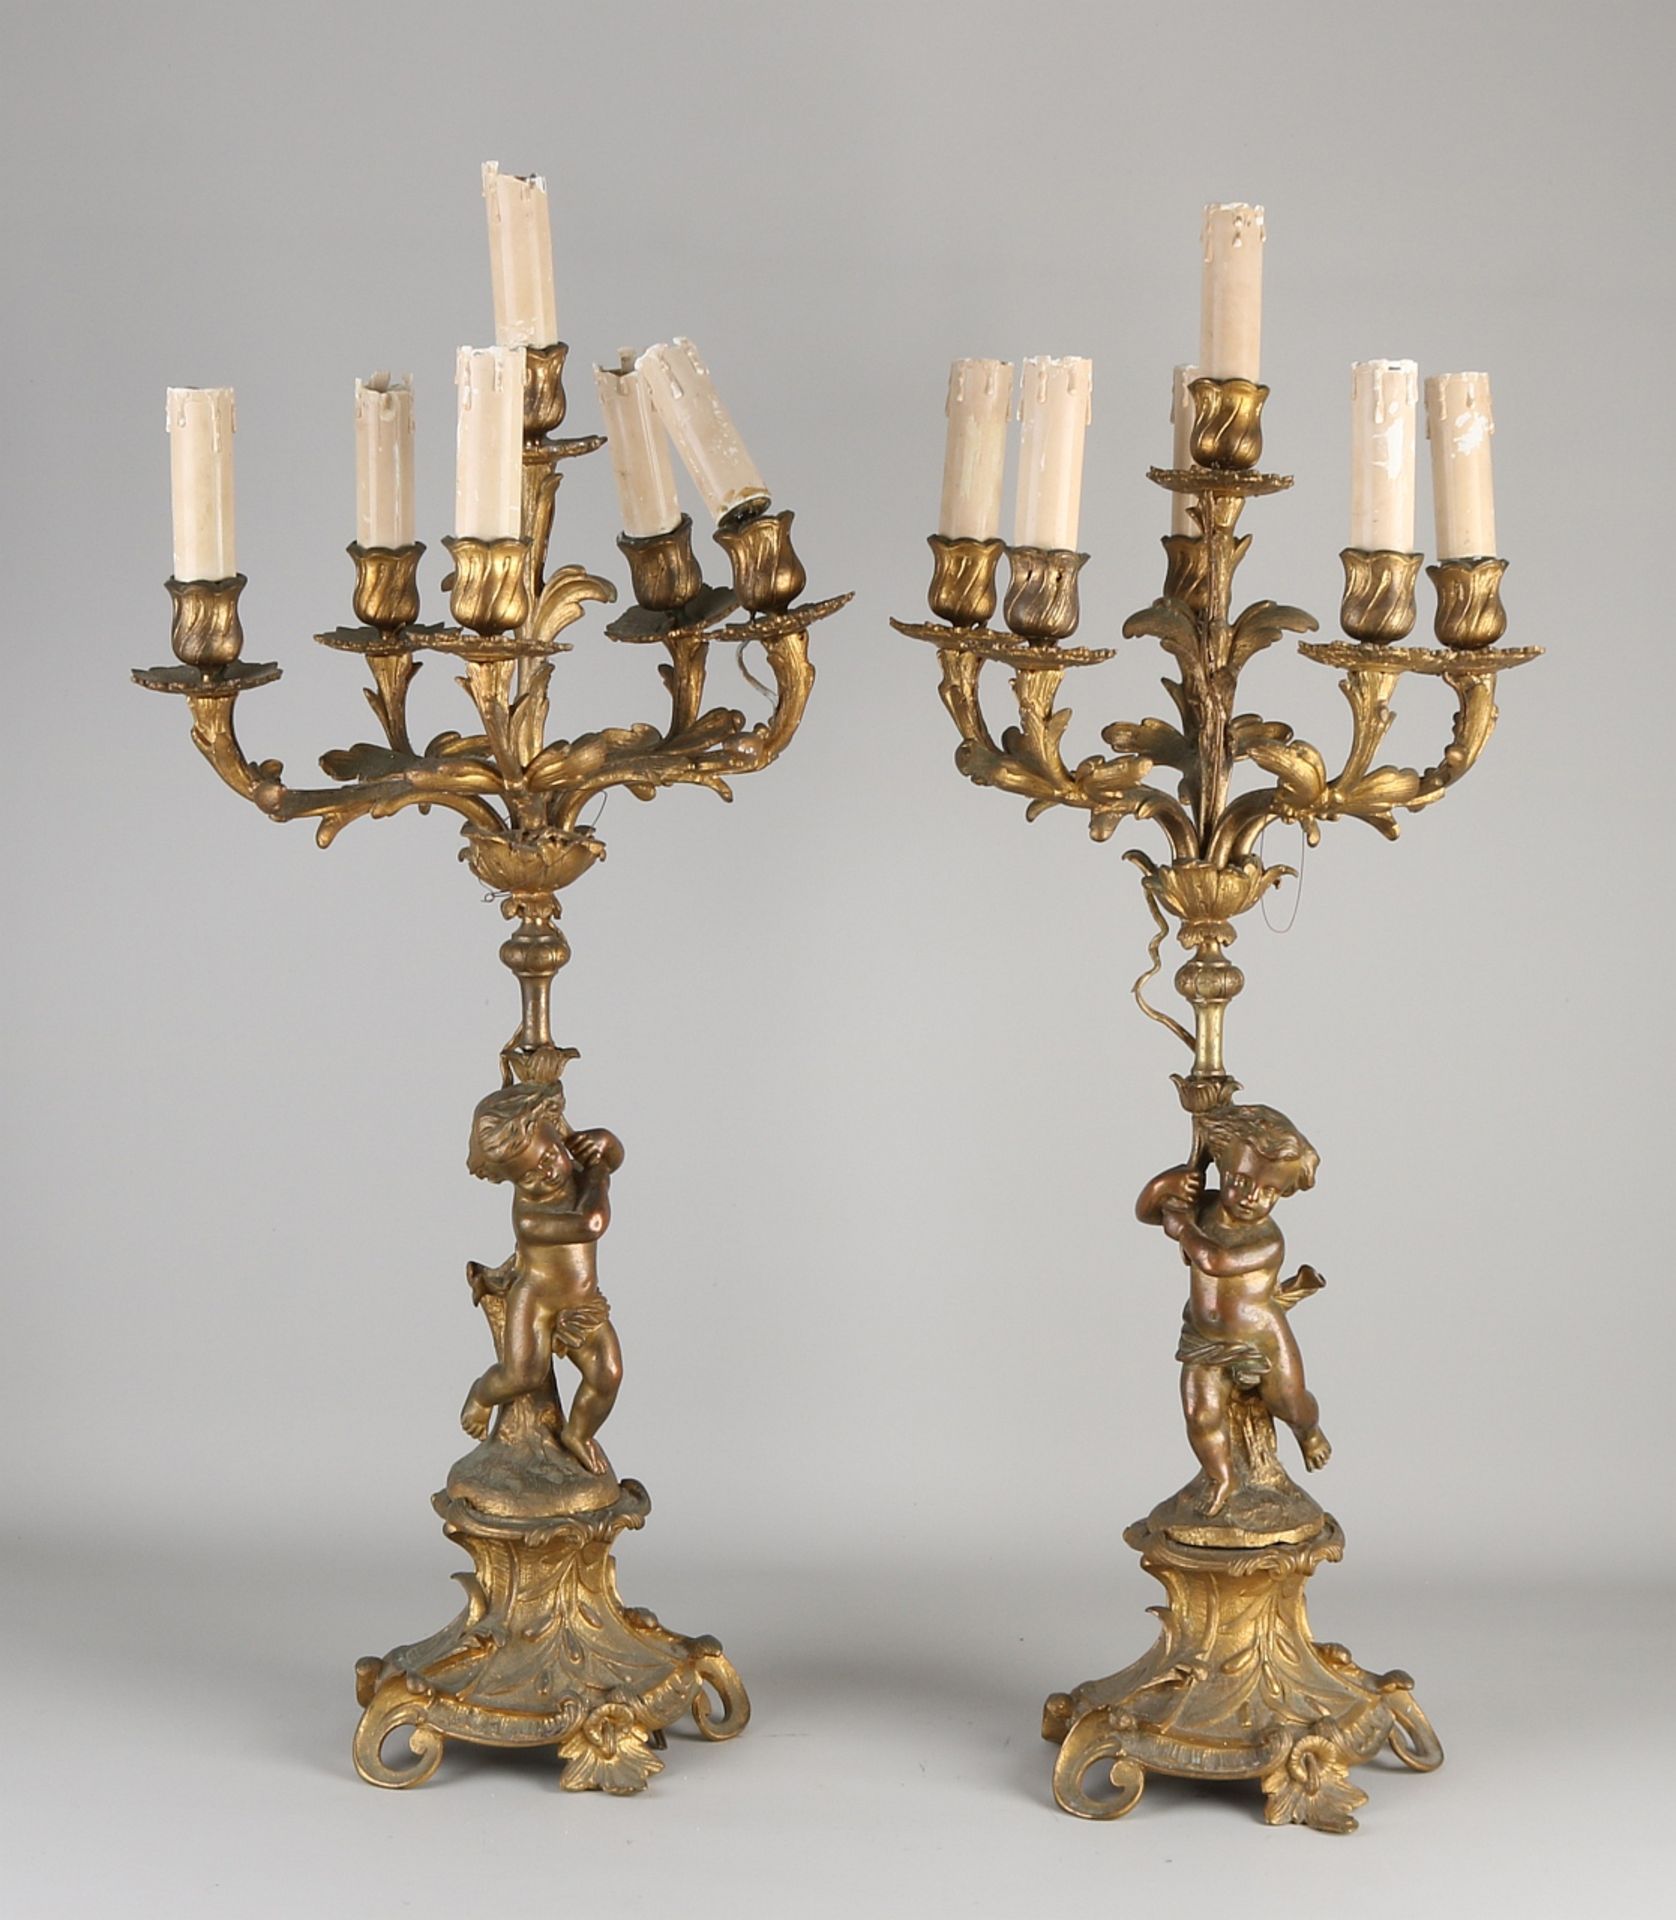 2 Candlesticks with putti, 1870